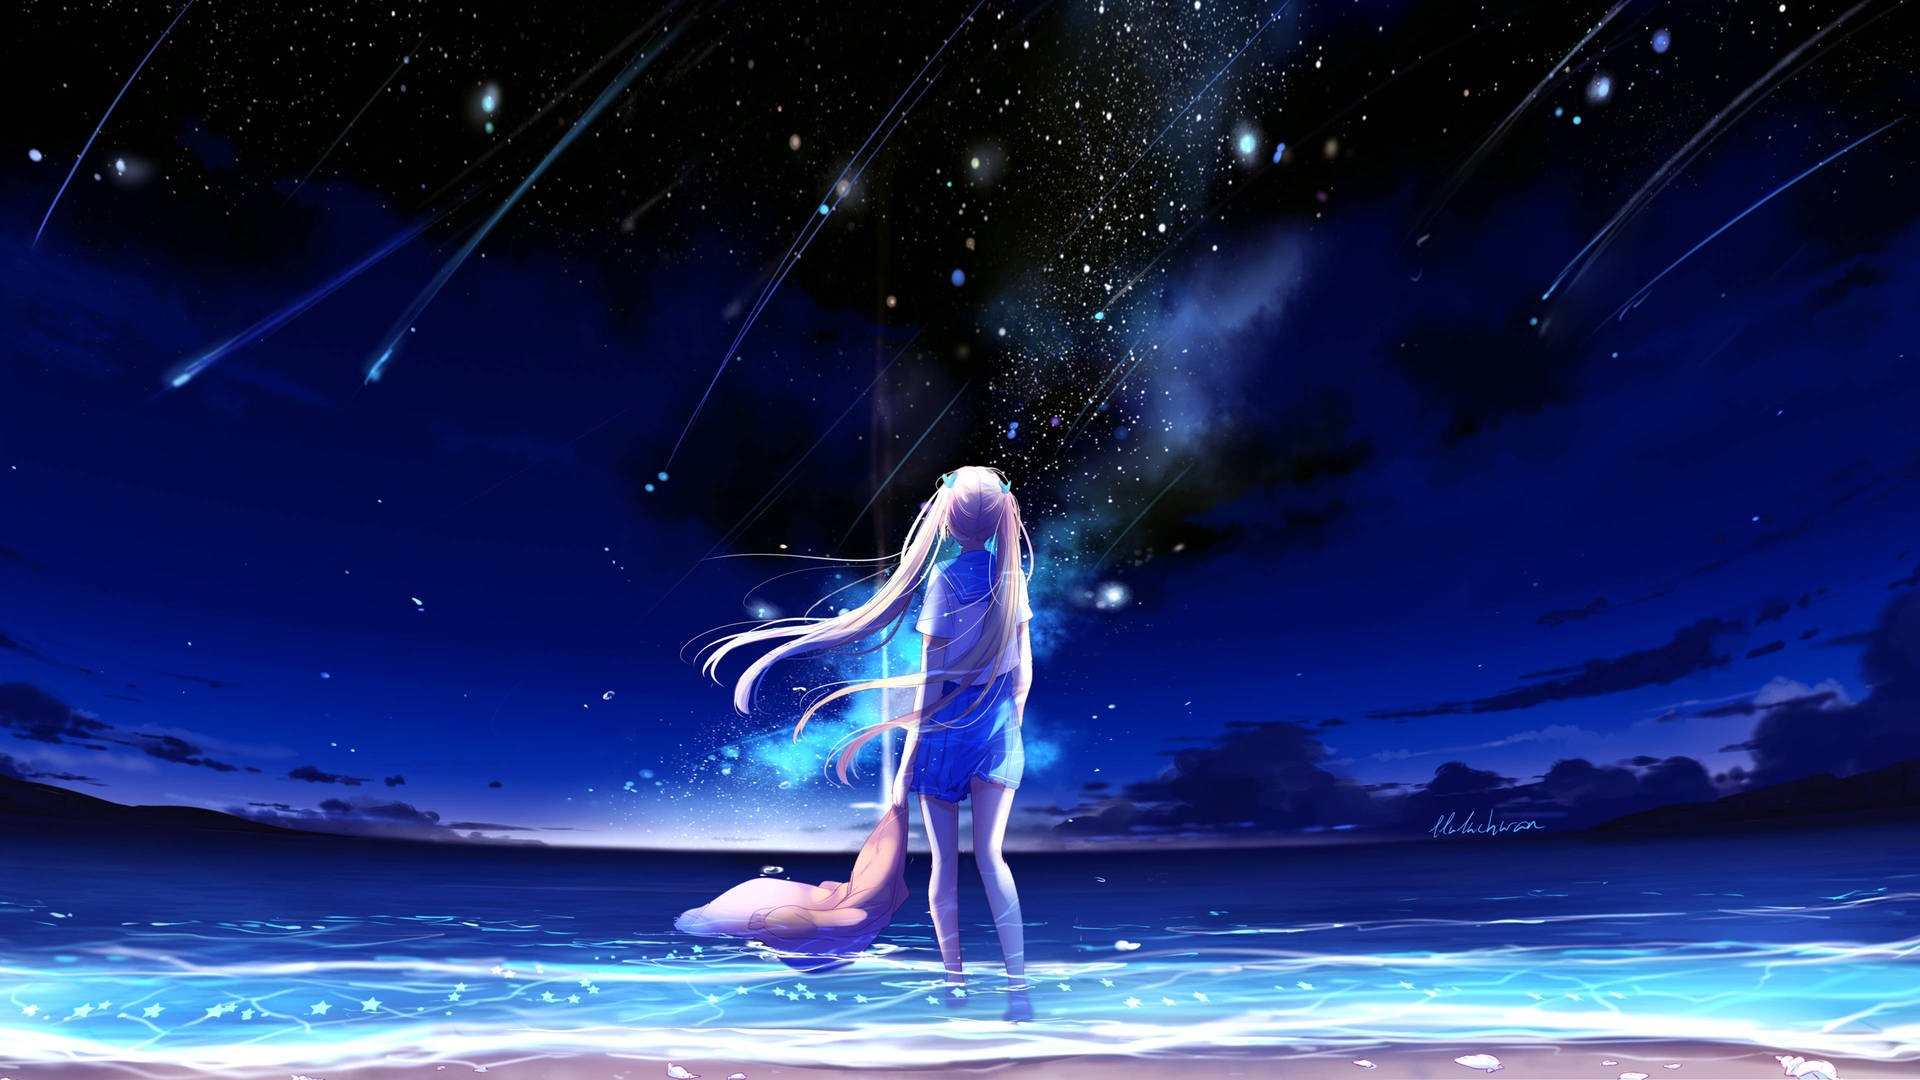 Animation Anime Girl Shooting Stars At Beach Background